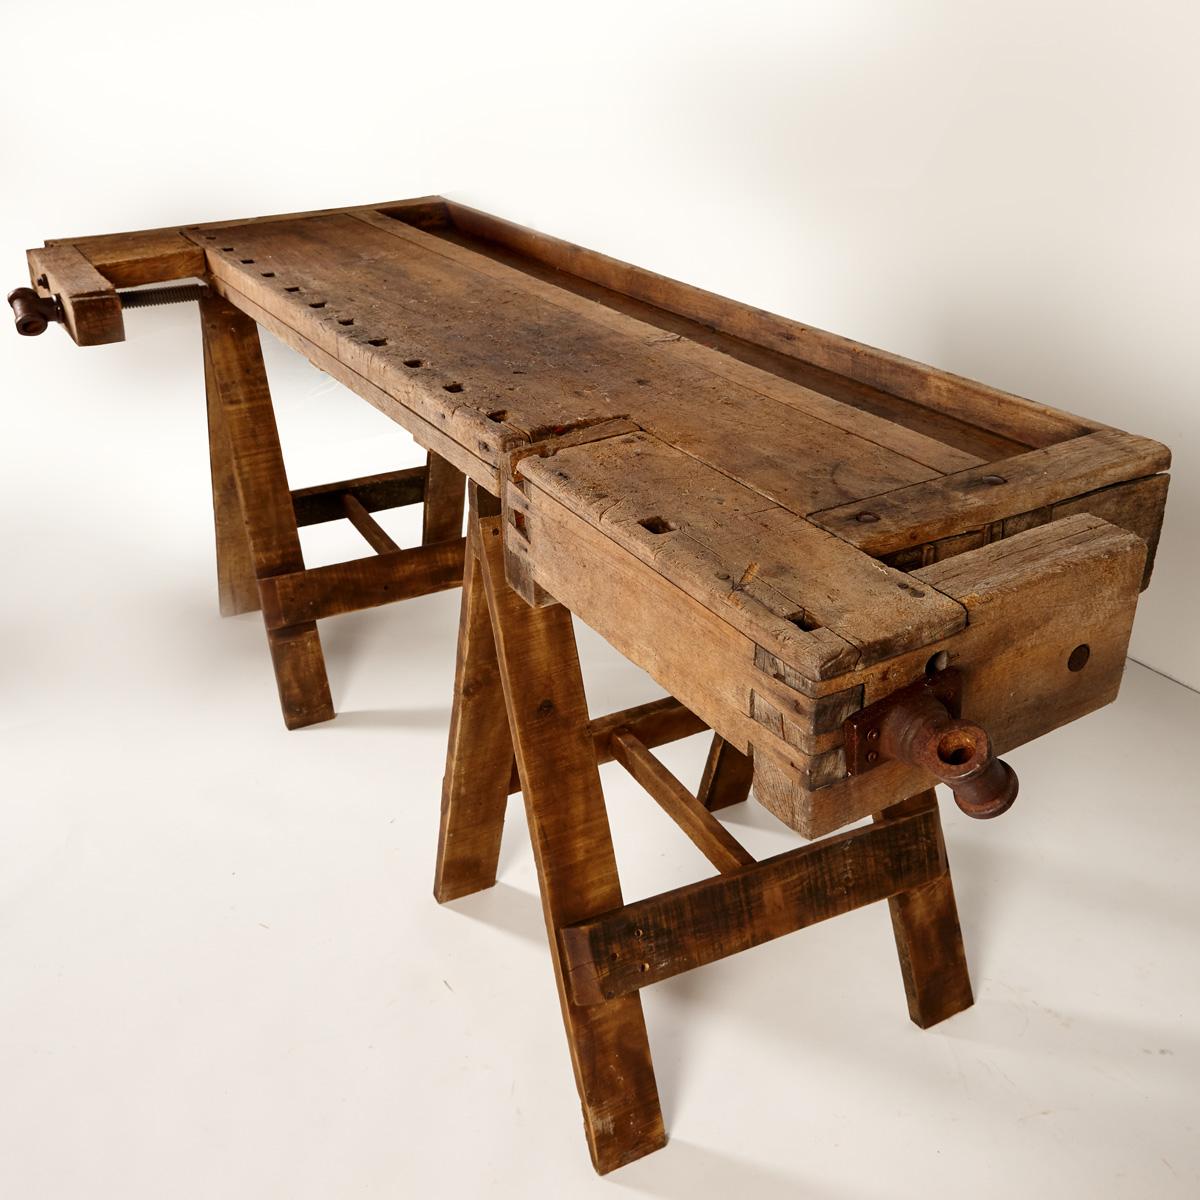 An Antique Dutch Woodworking Bench - Price Estimate: $750 